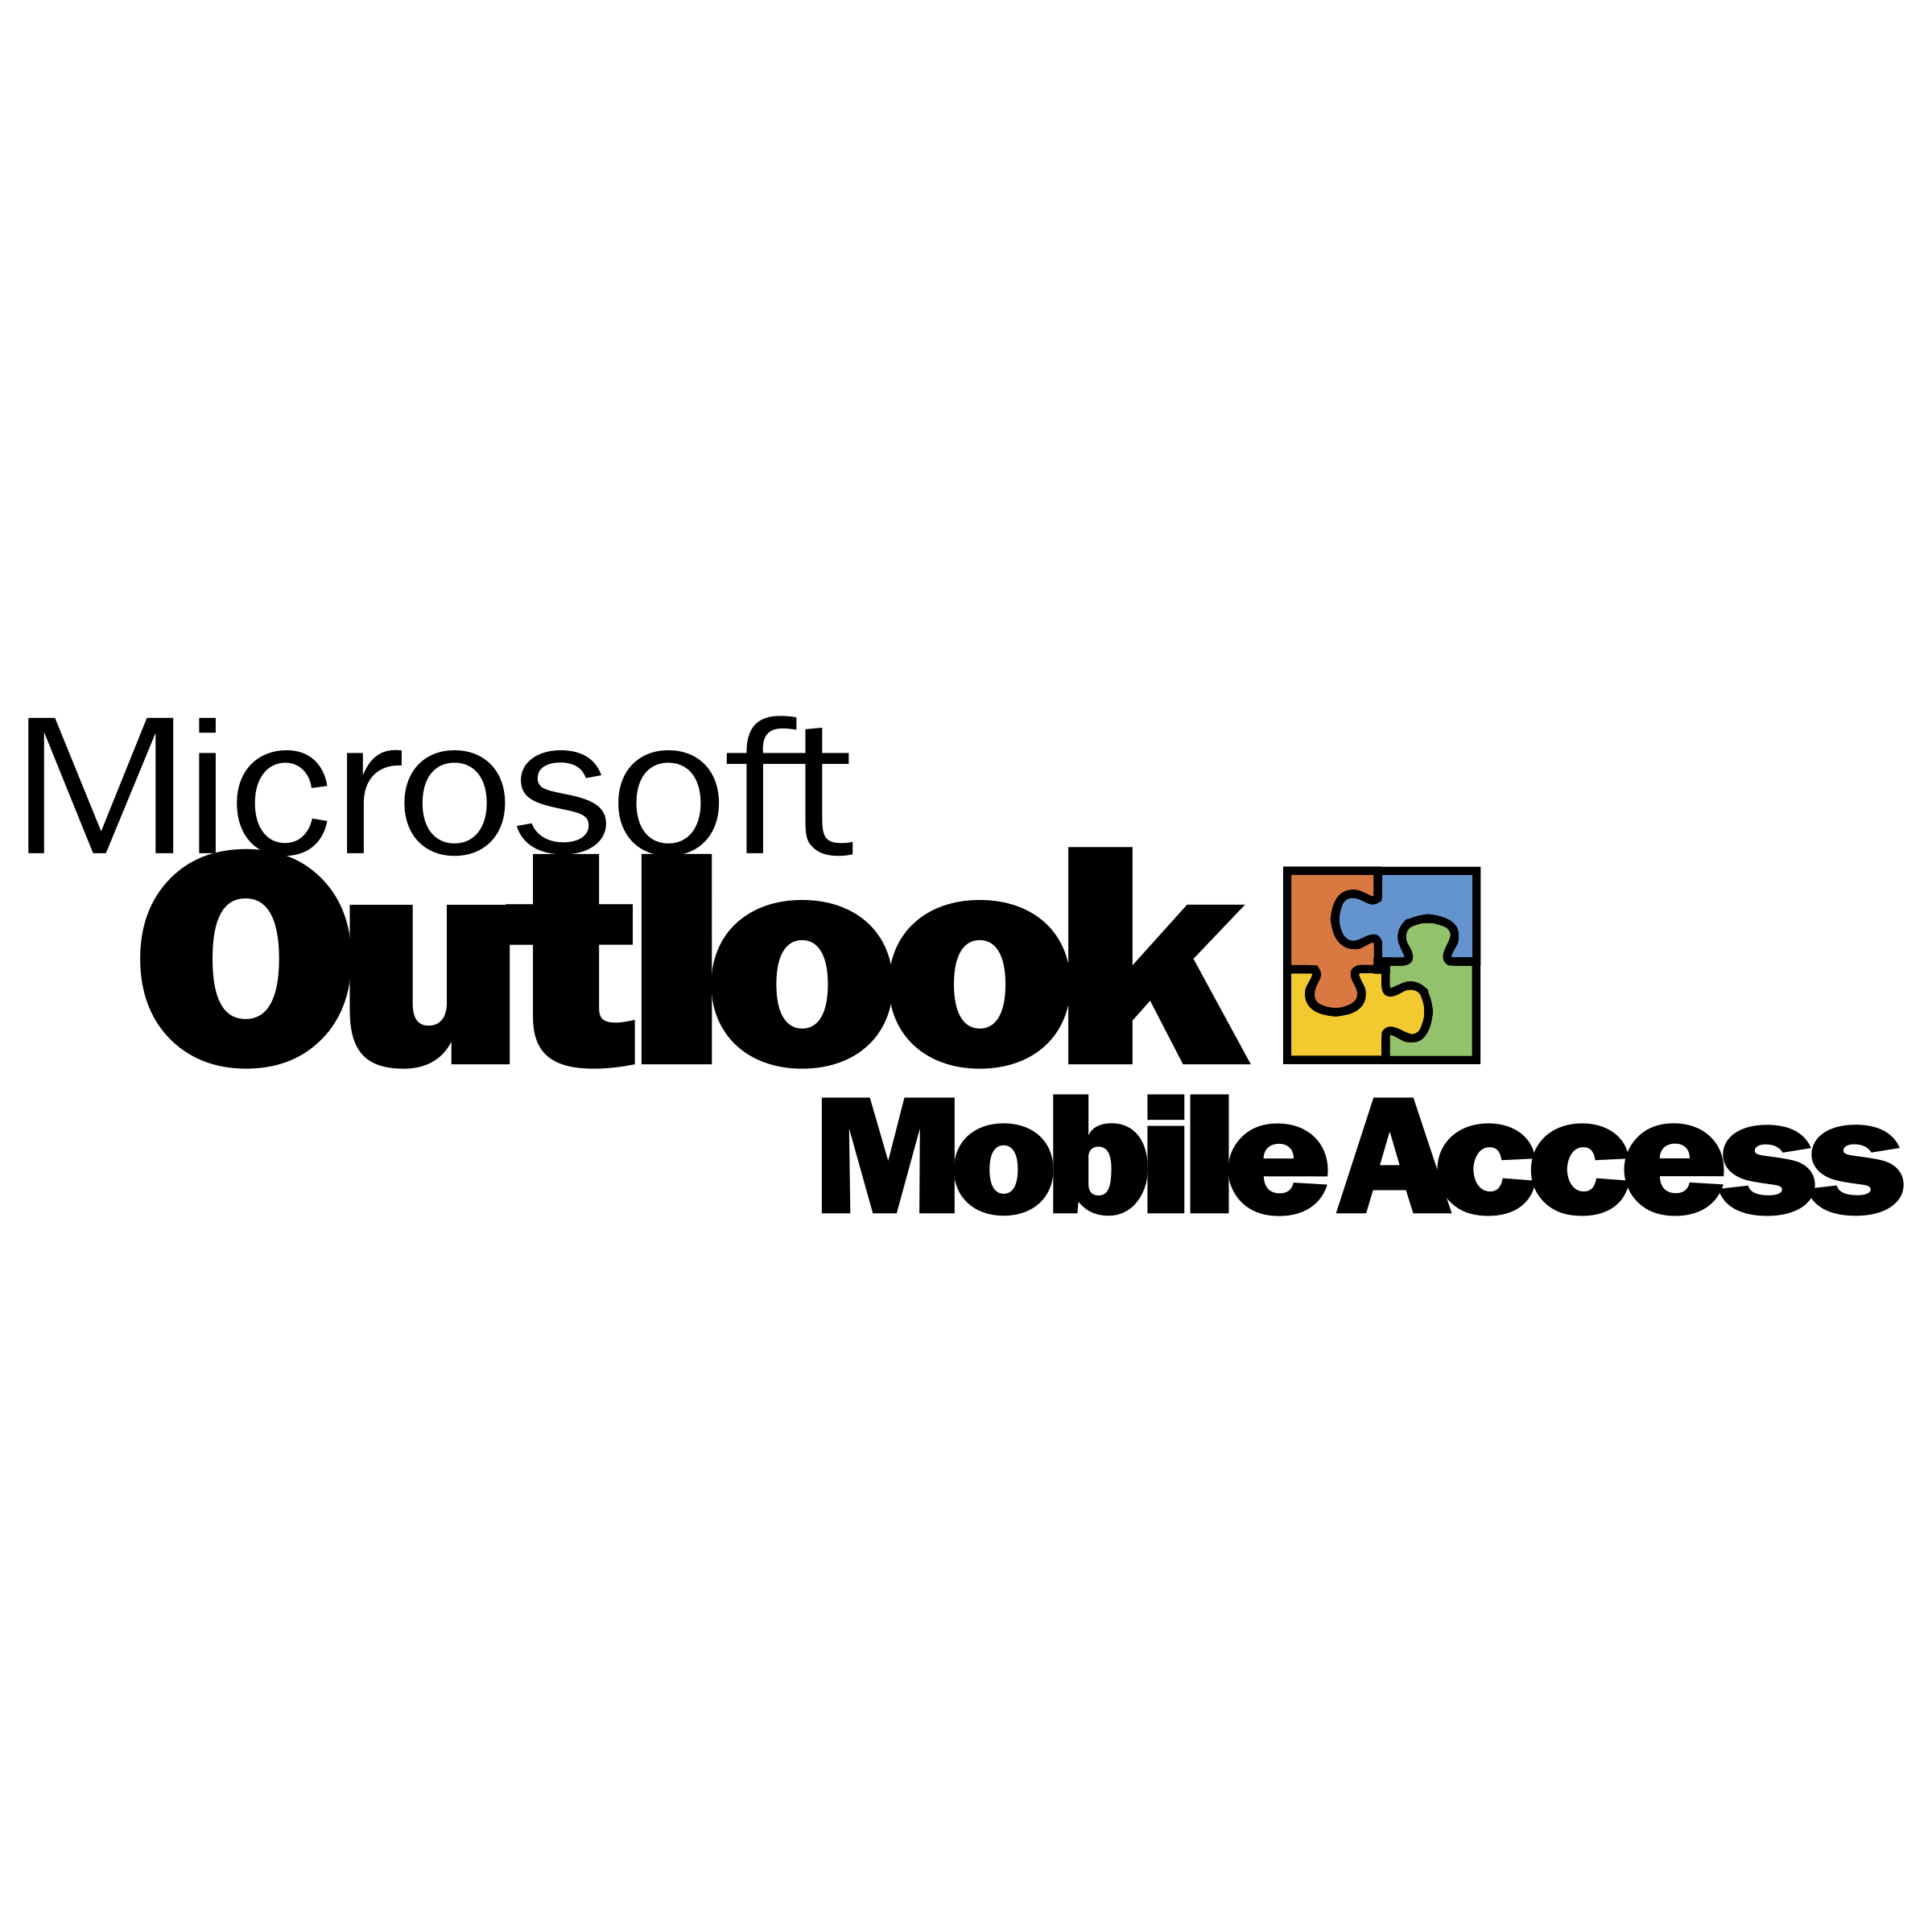 White Outlook Logo - Microsoft Outlook Mobile Access Logo PNG Transparent & SVG Vector ...